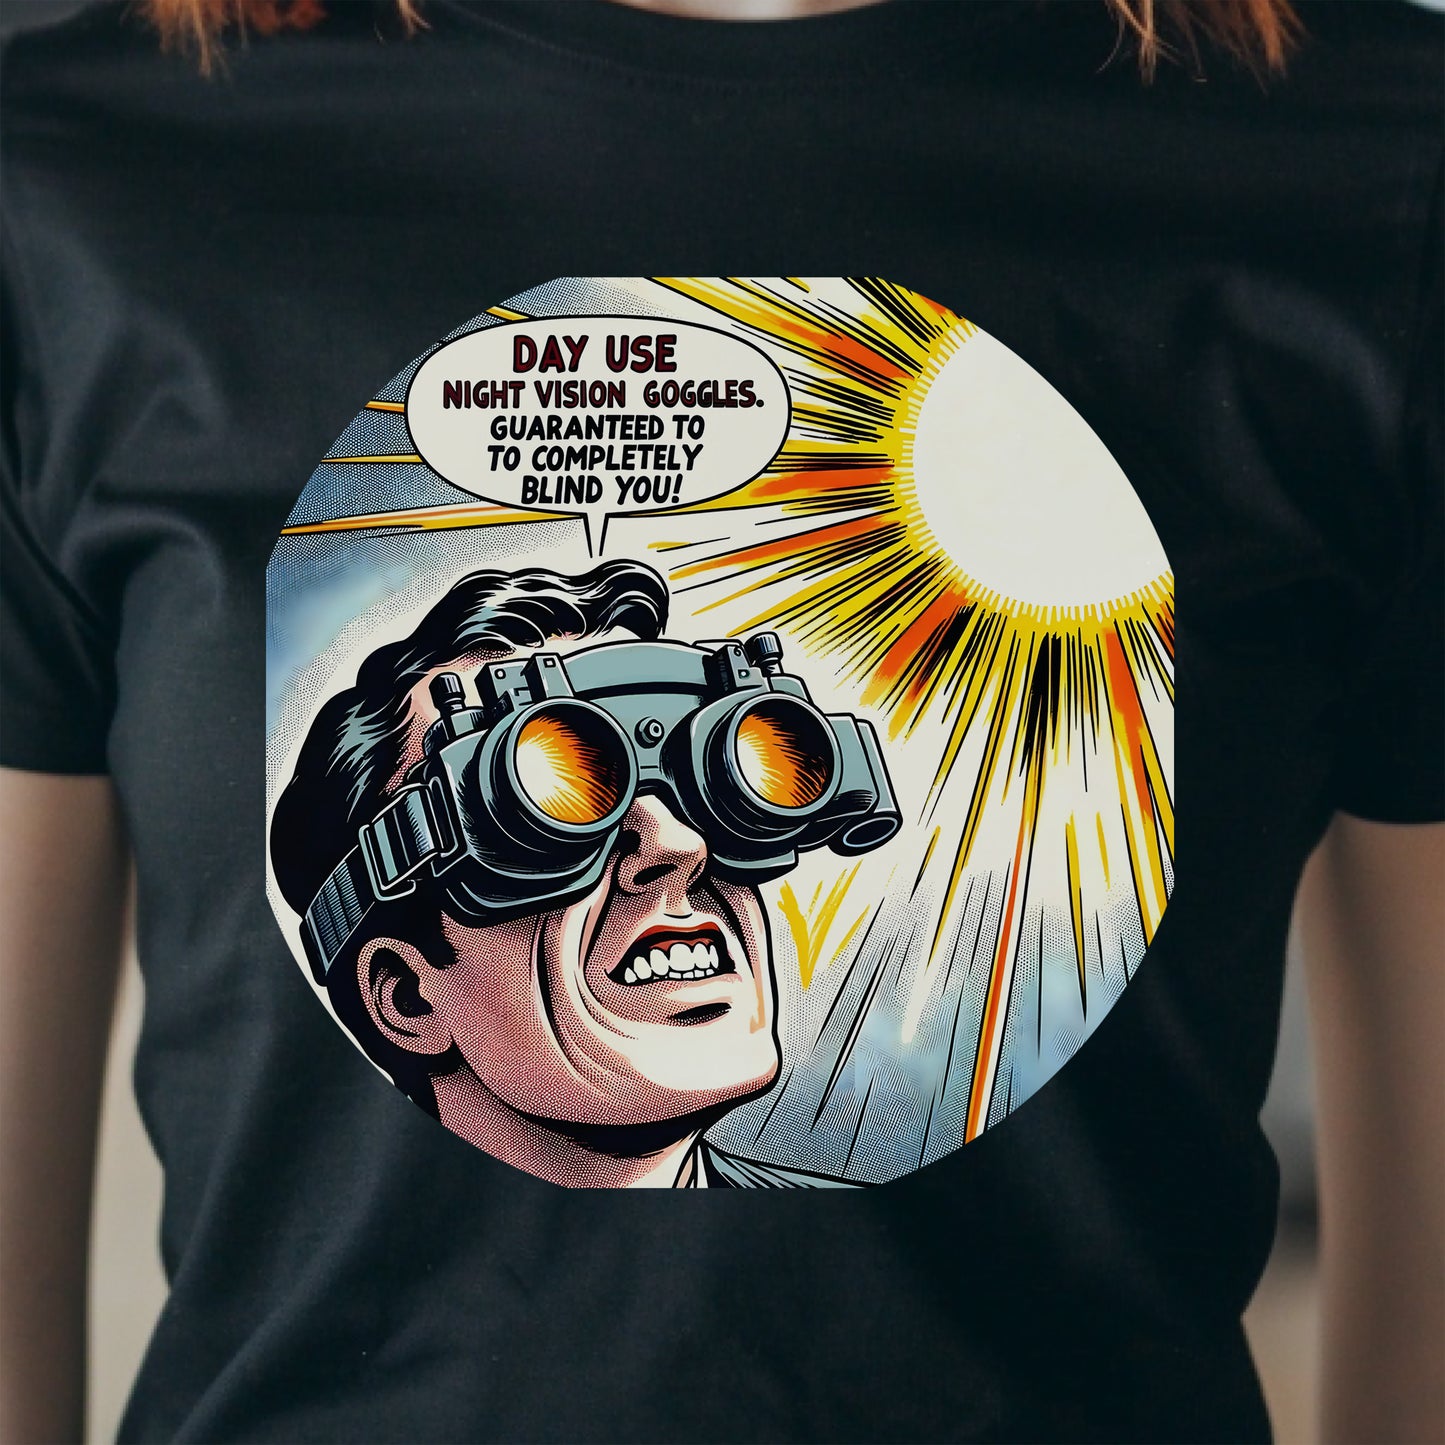 Night Vision Goggles Daylight Fail T-Shirt - Failed Inventions TShirt, Funny Night Vision Tshirt, Night Vision TShirt, Funny TShirt Gift